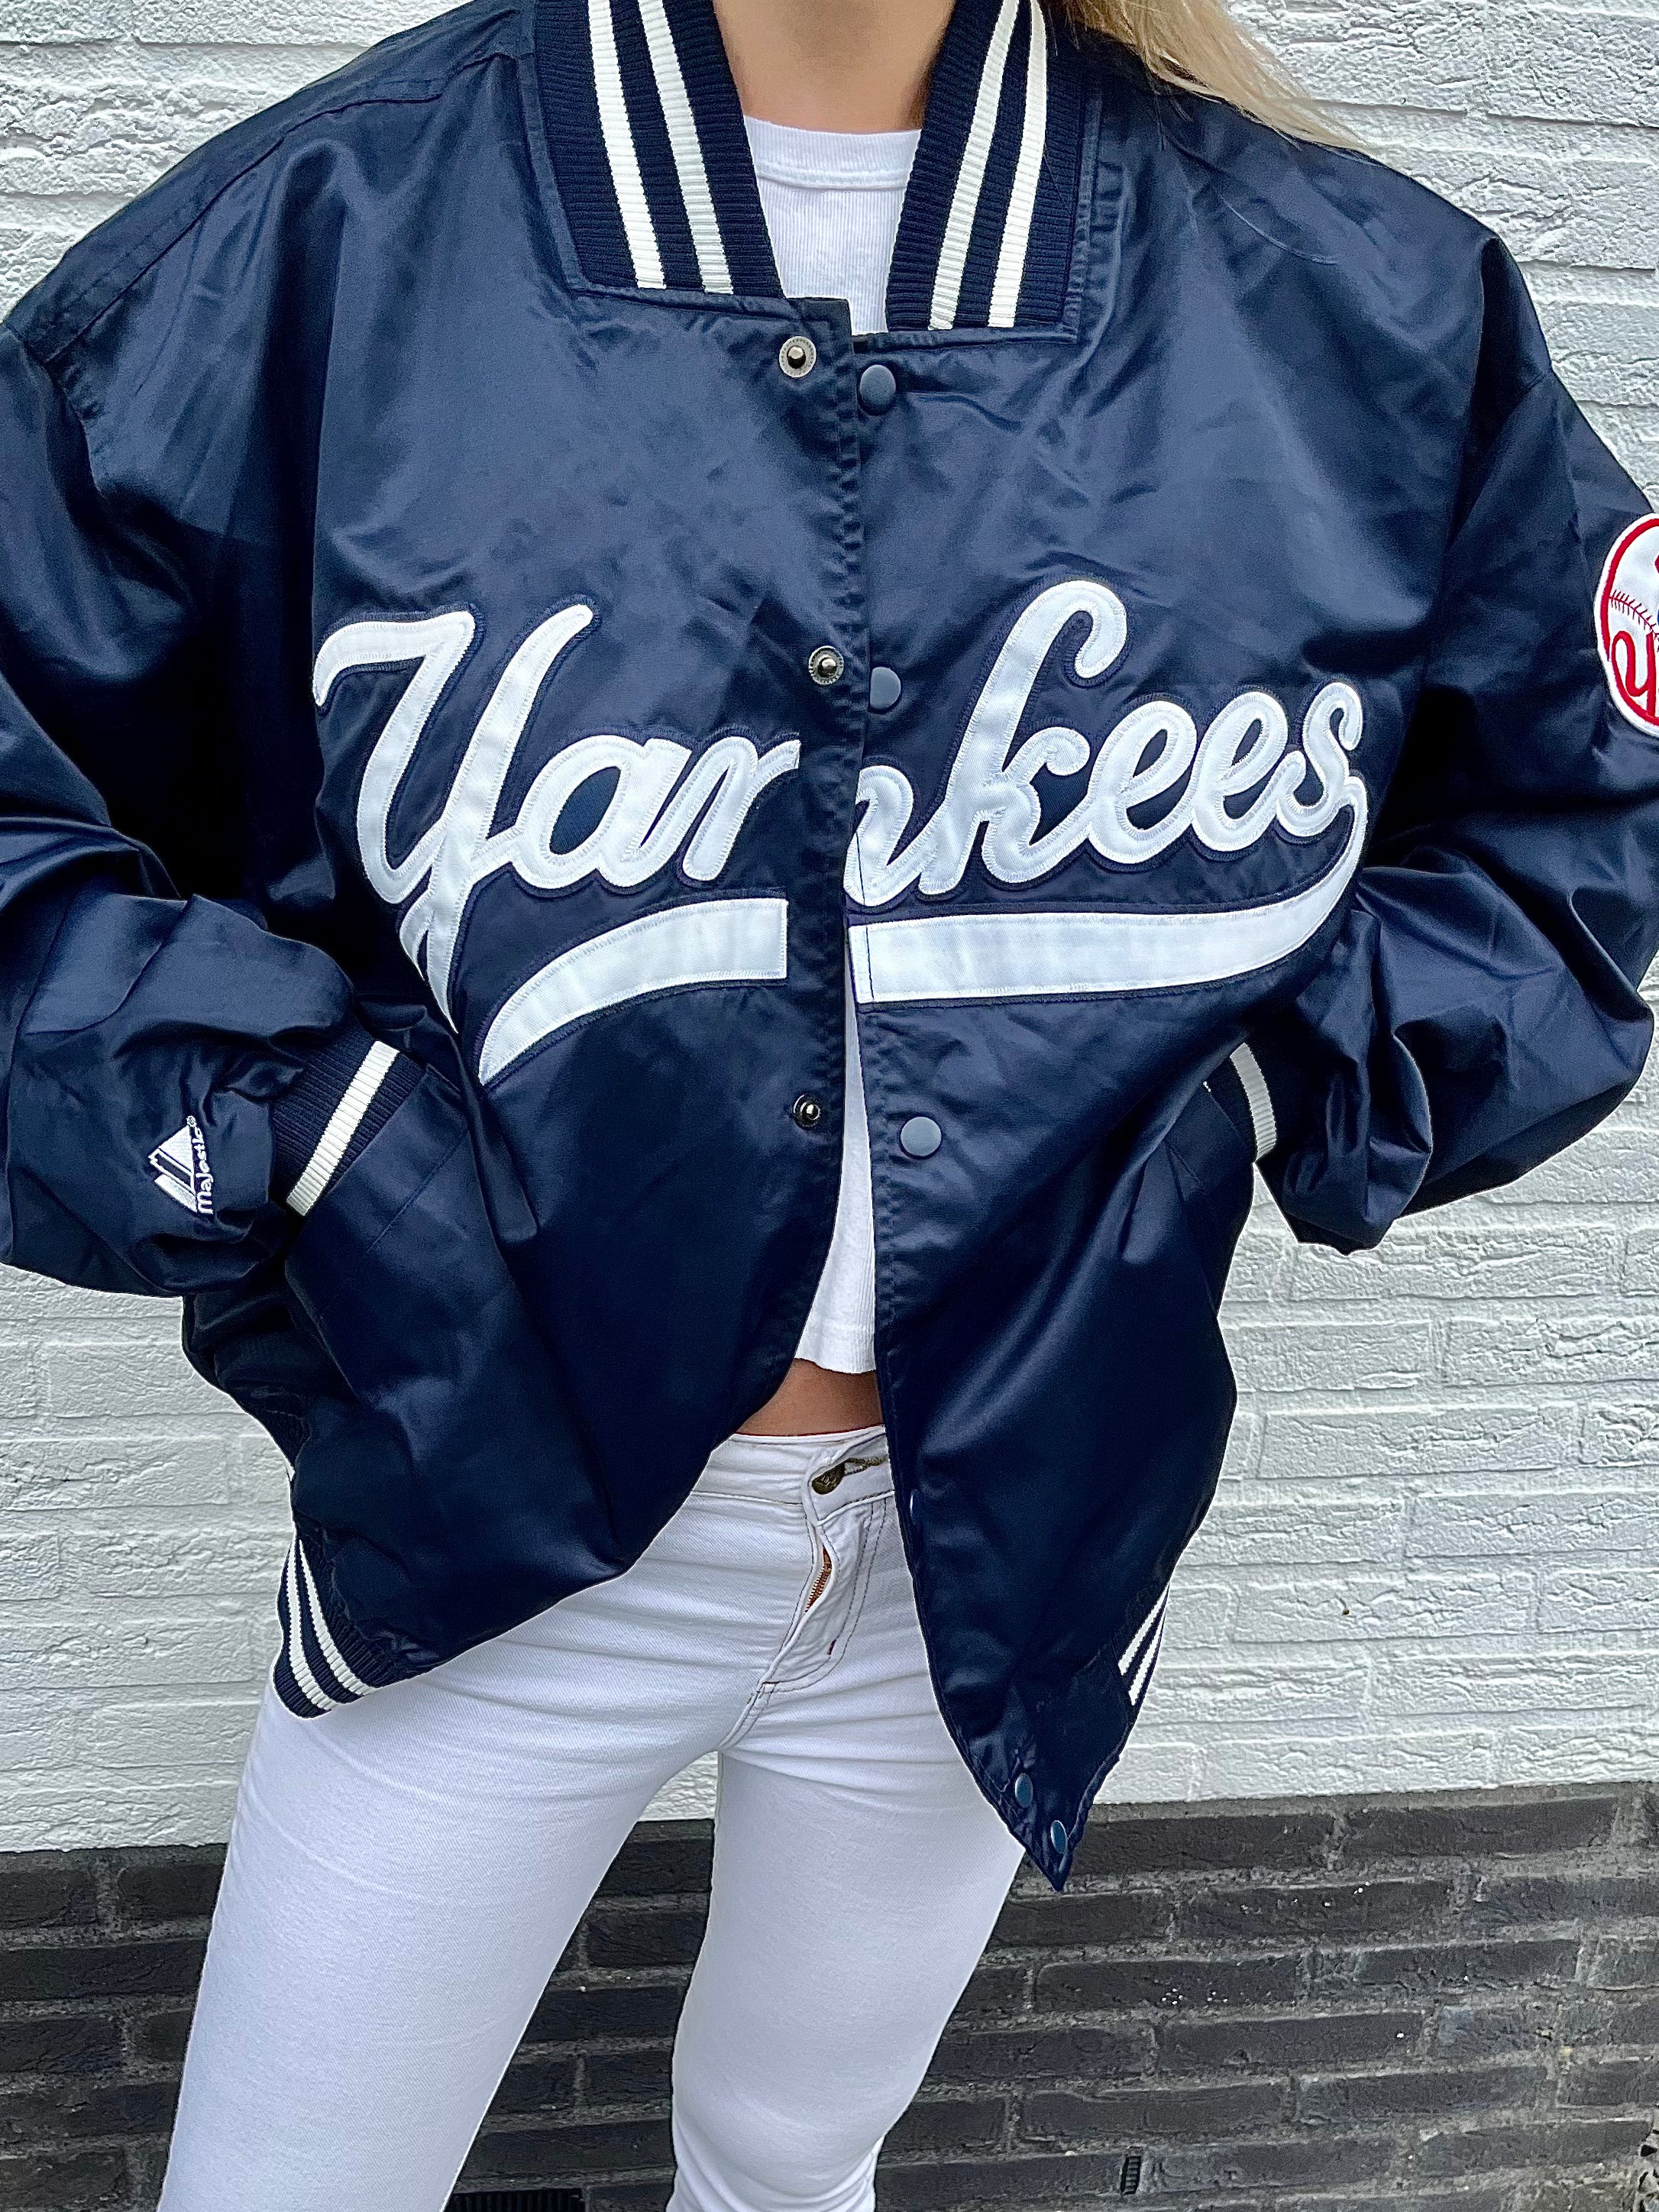 Vintage Majestic Yankees Satin Bomber Jacket for Sale in New York